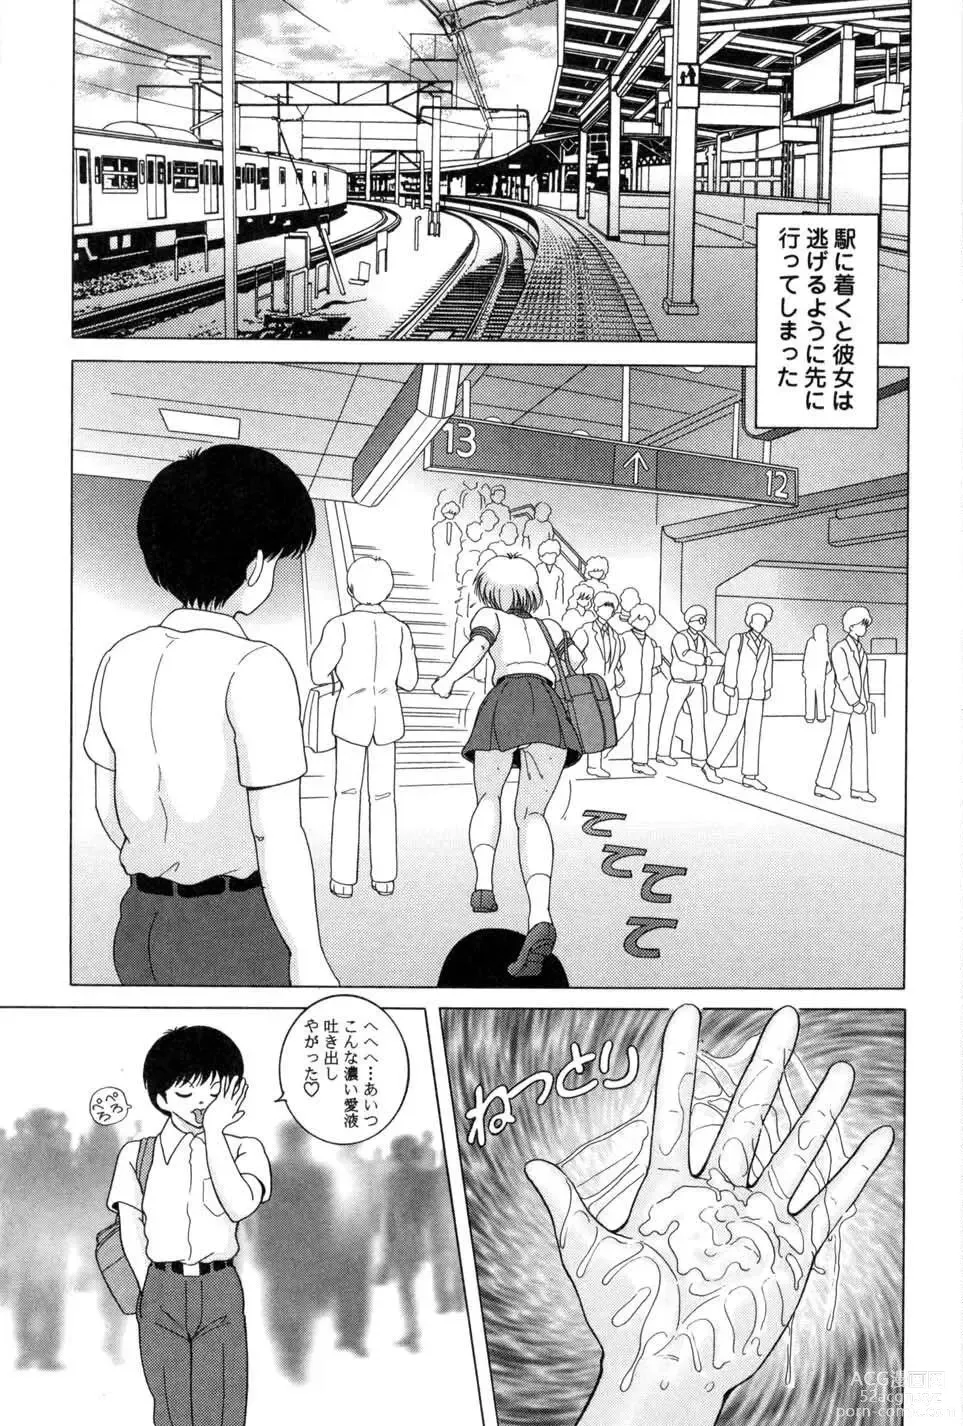 Page 13 of manga Jogakusei Maetsu no Kyoukasho - The Schoolgirl With Shameful Textbook